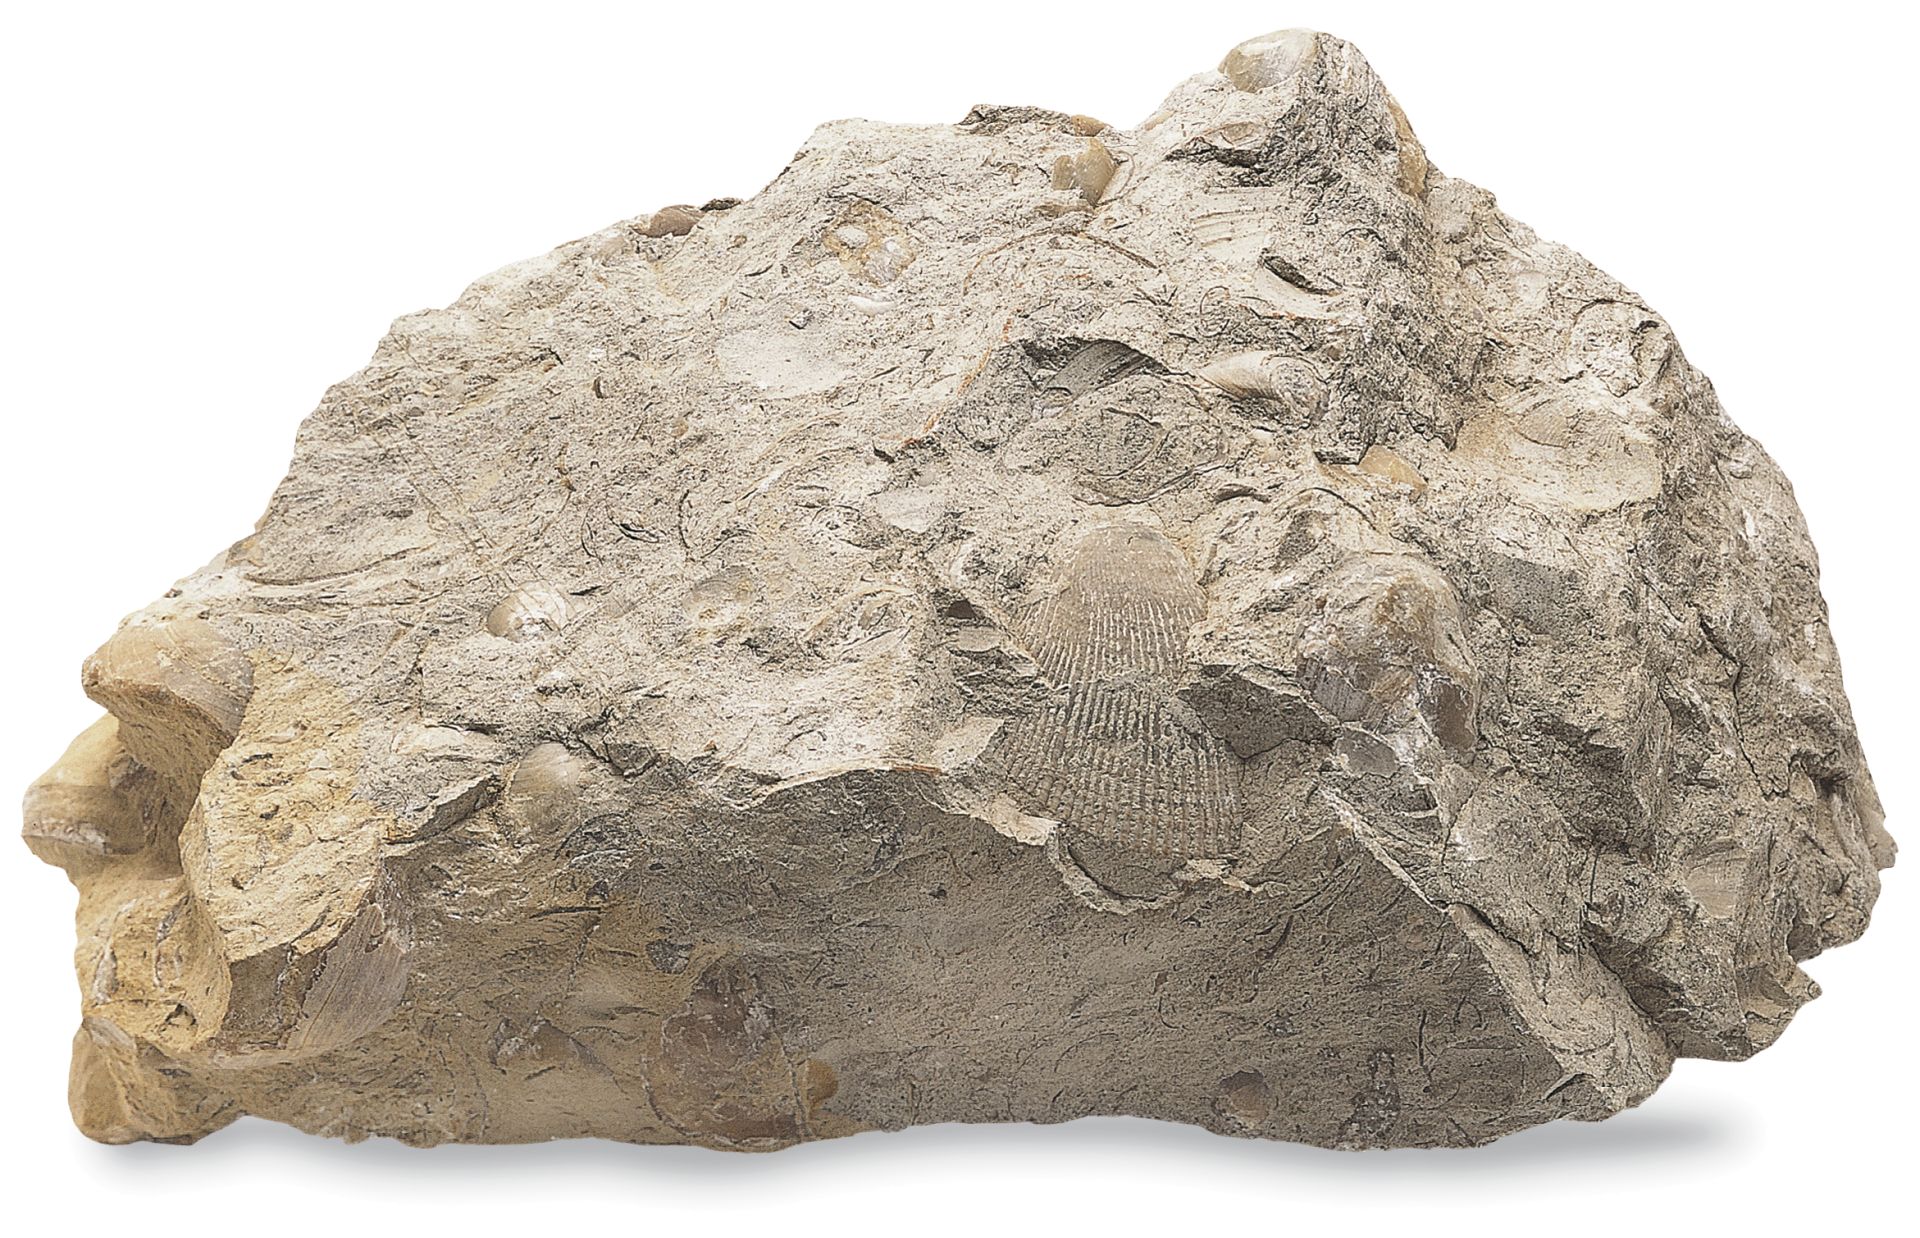 Sedimentary Rocks | Types Of Sedimentary Rocks | DK Find Out